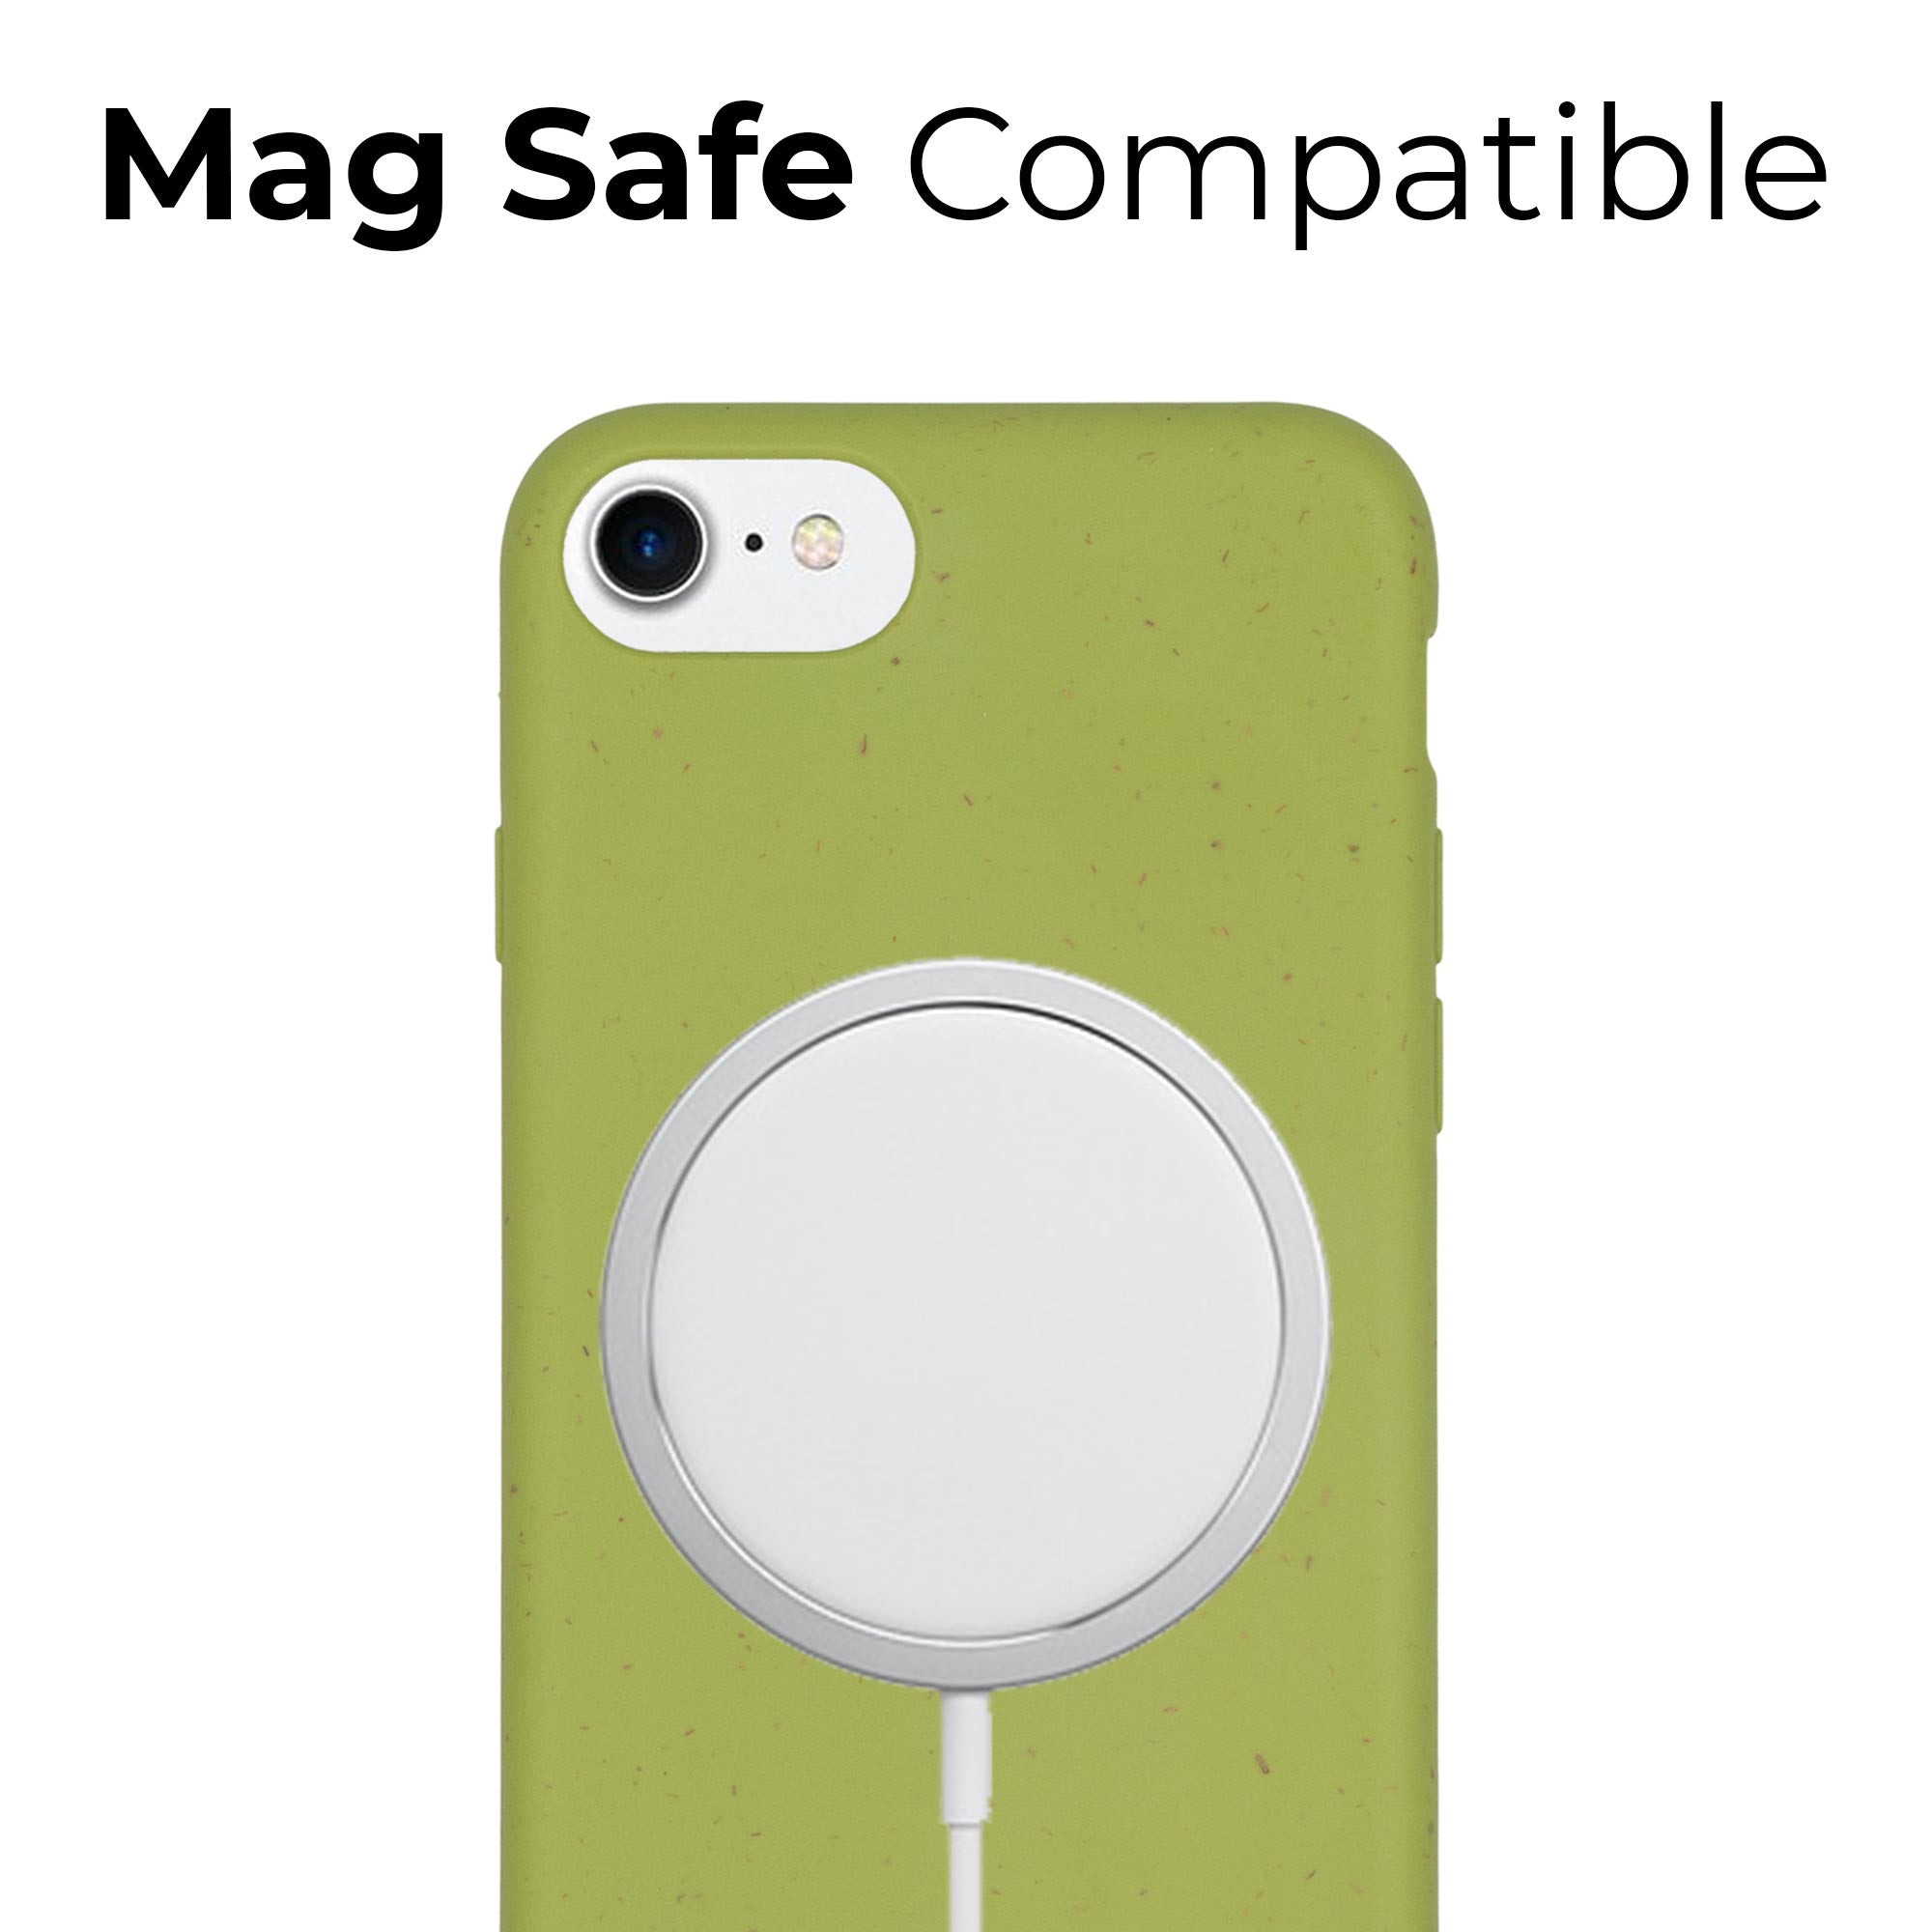 Carcasa para teléfono verde compatible con carga inalámbrica y segura Mag